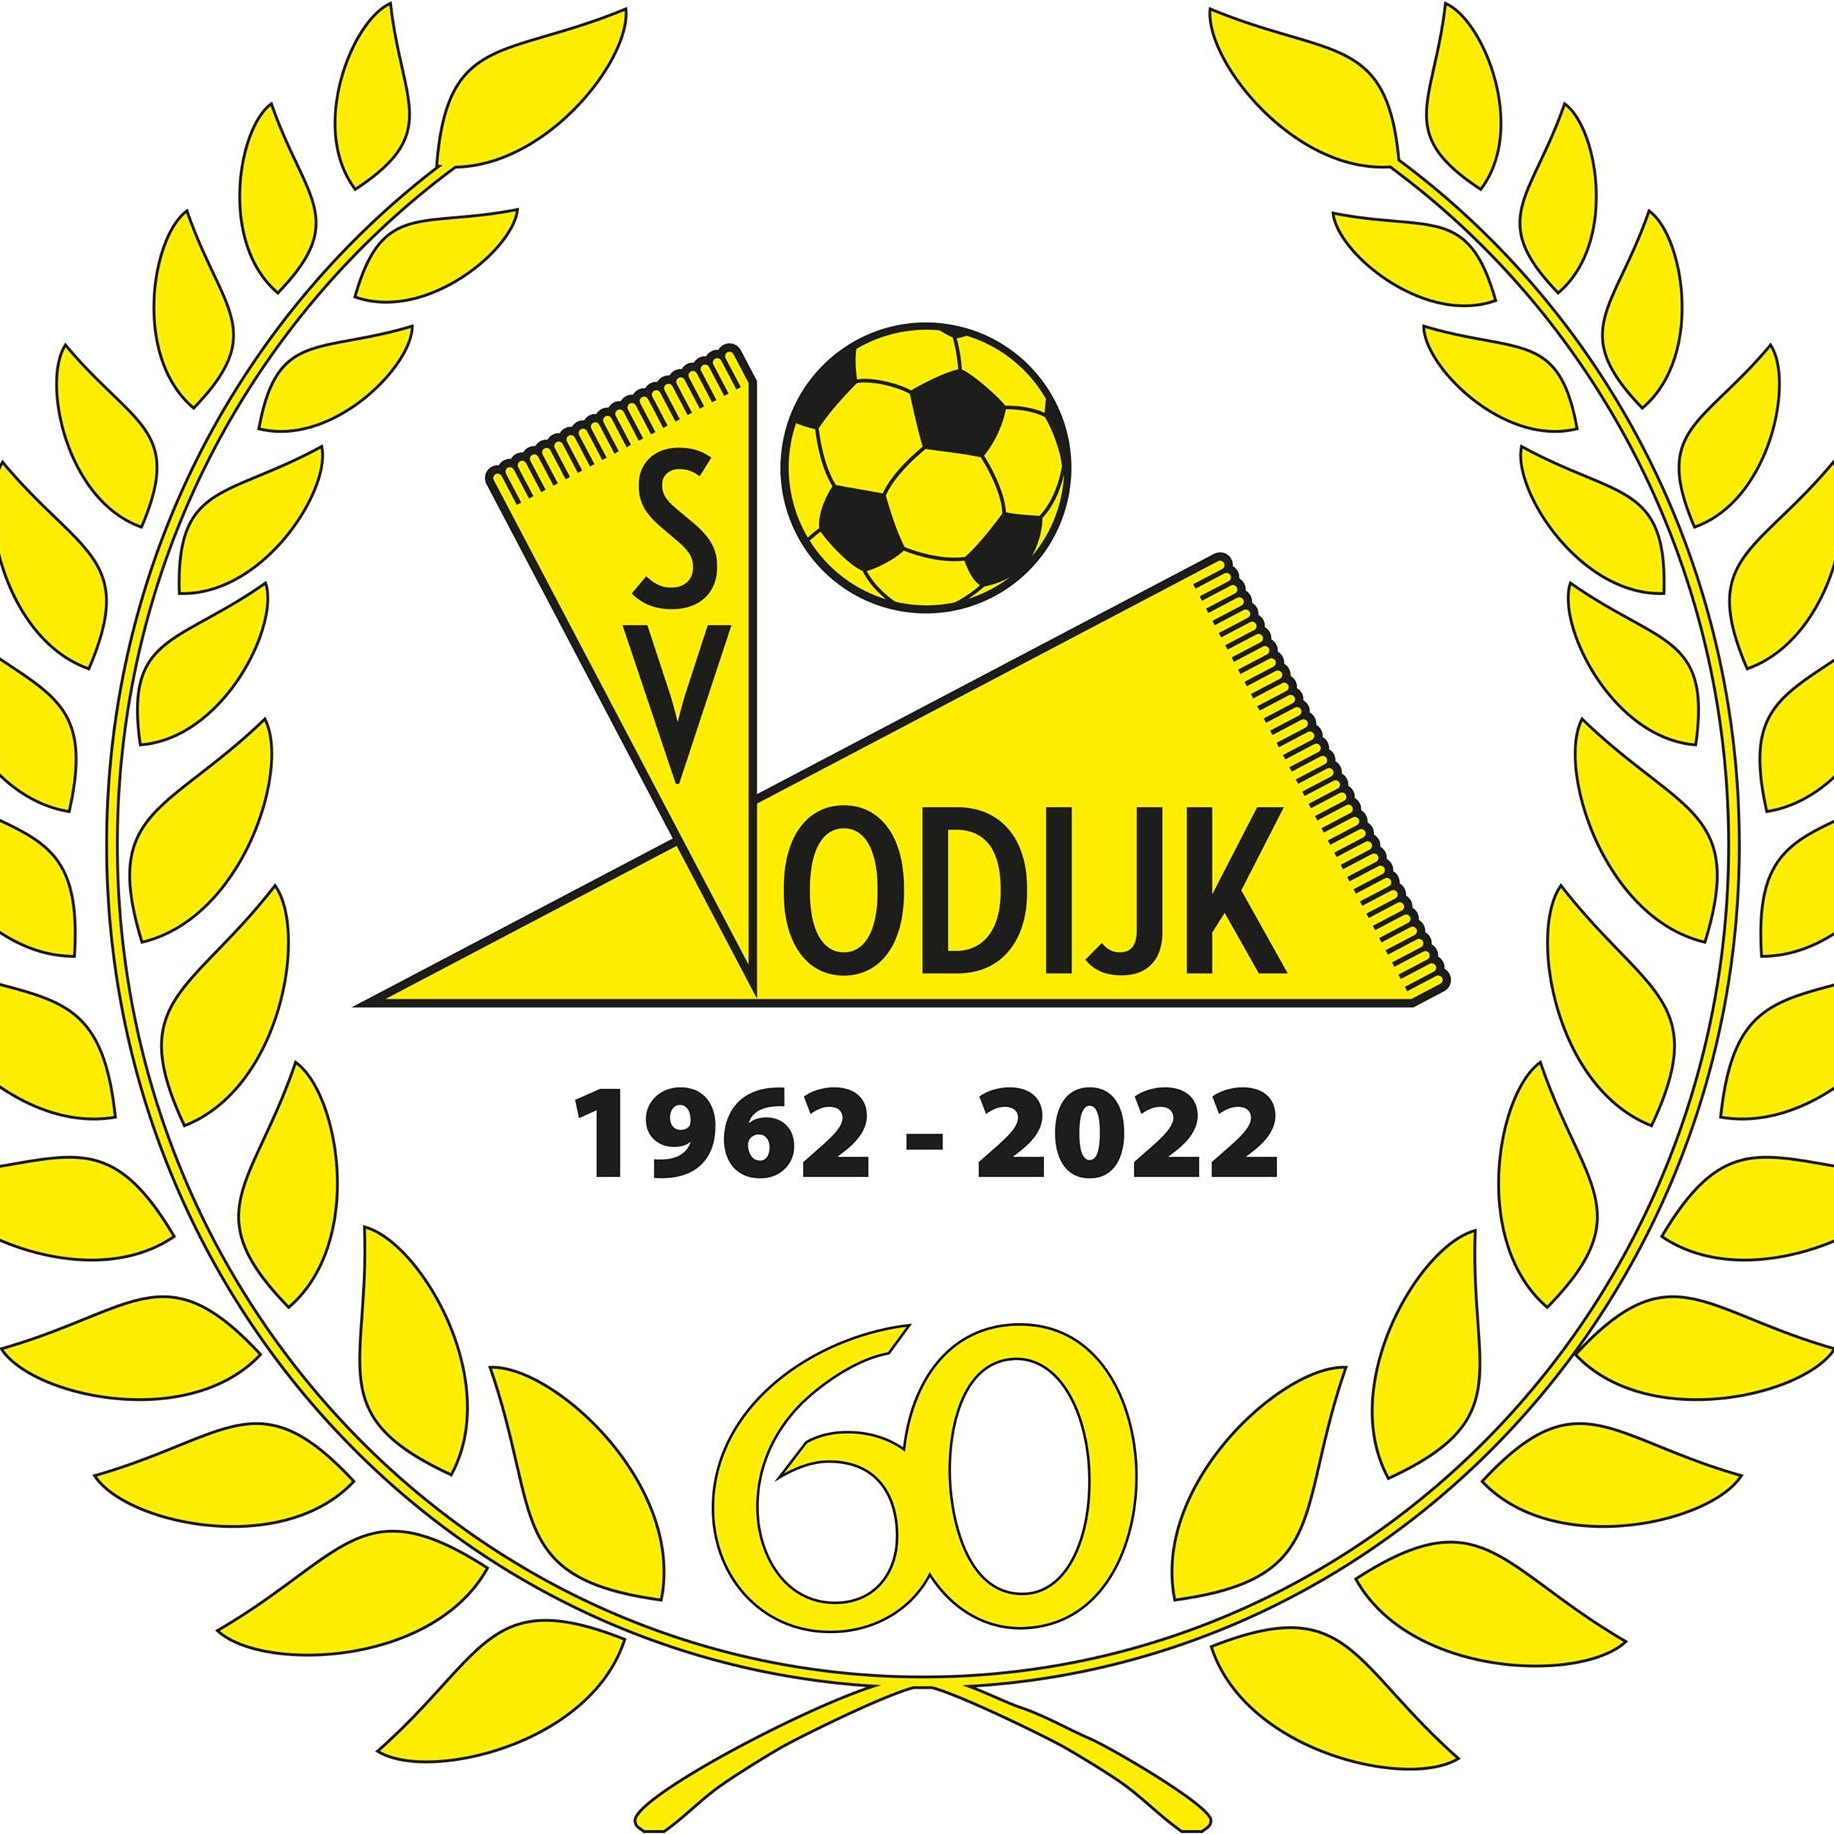 Profile image of venue SV Odijk